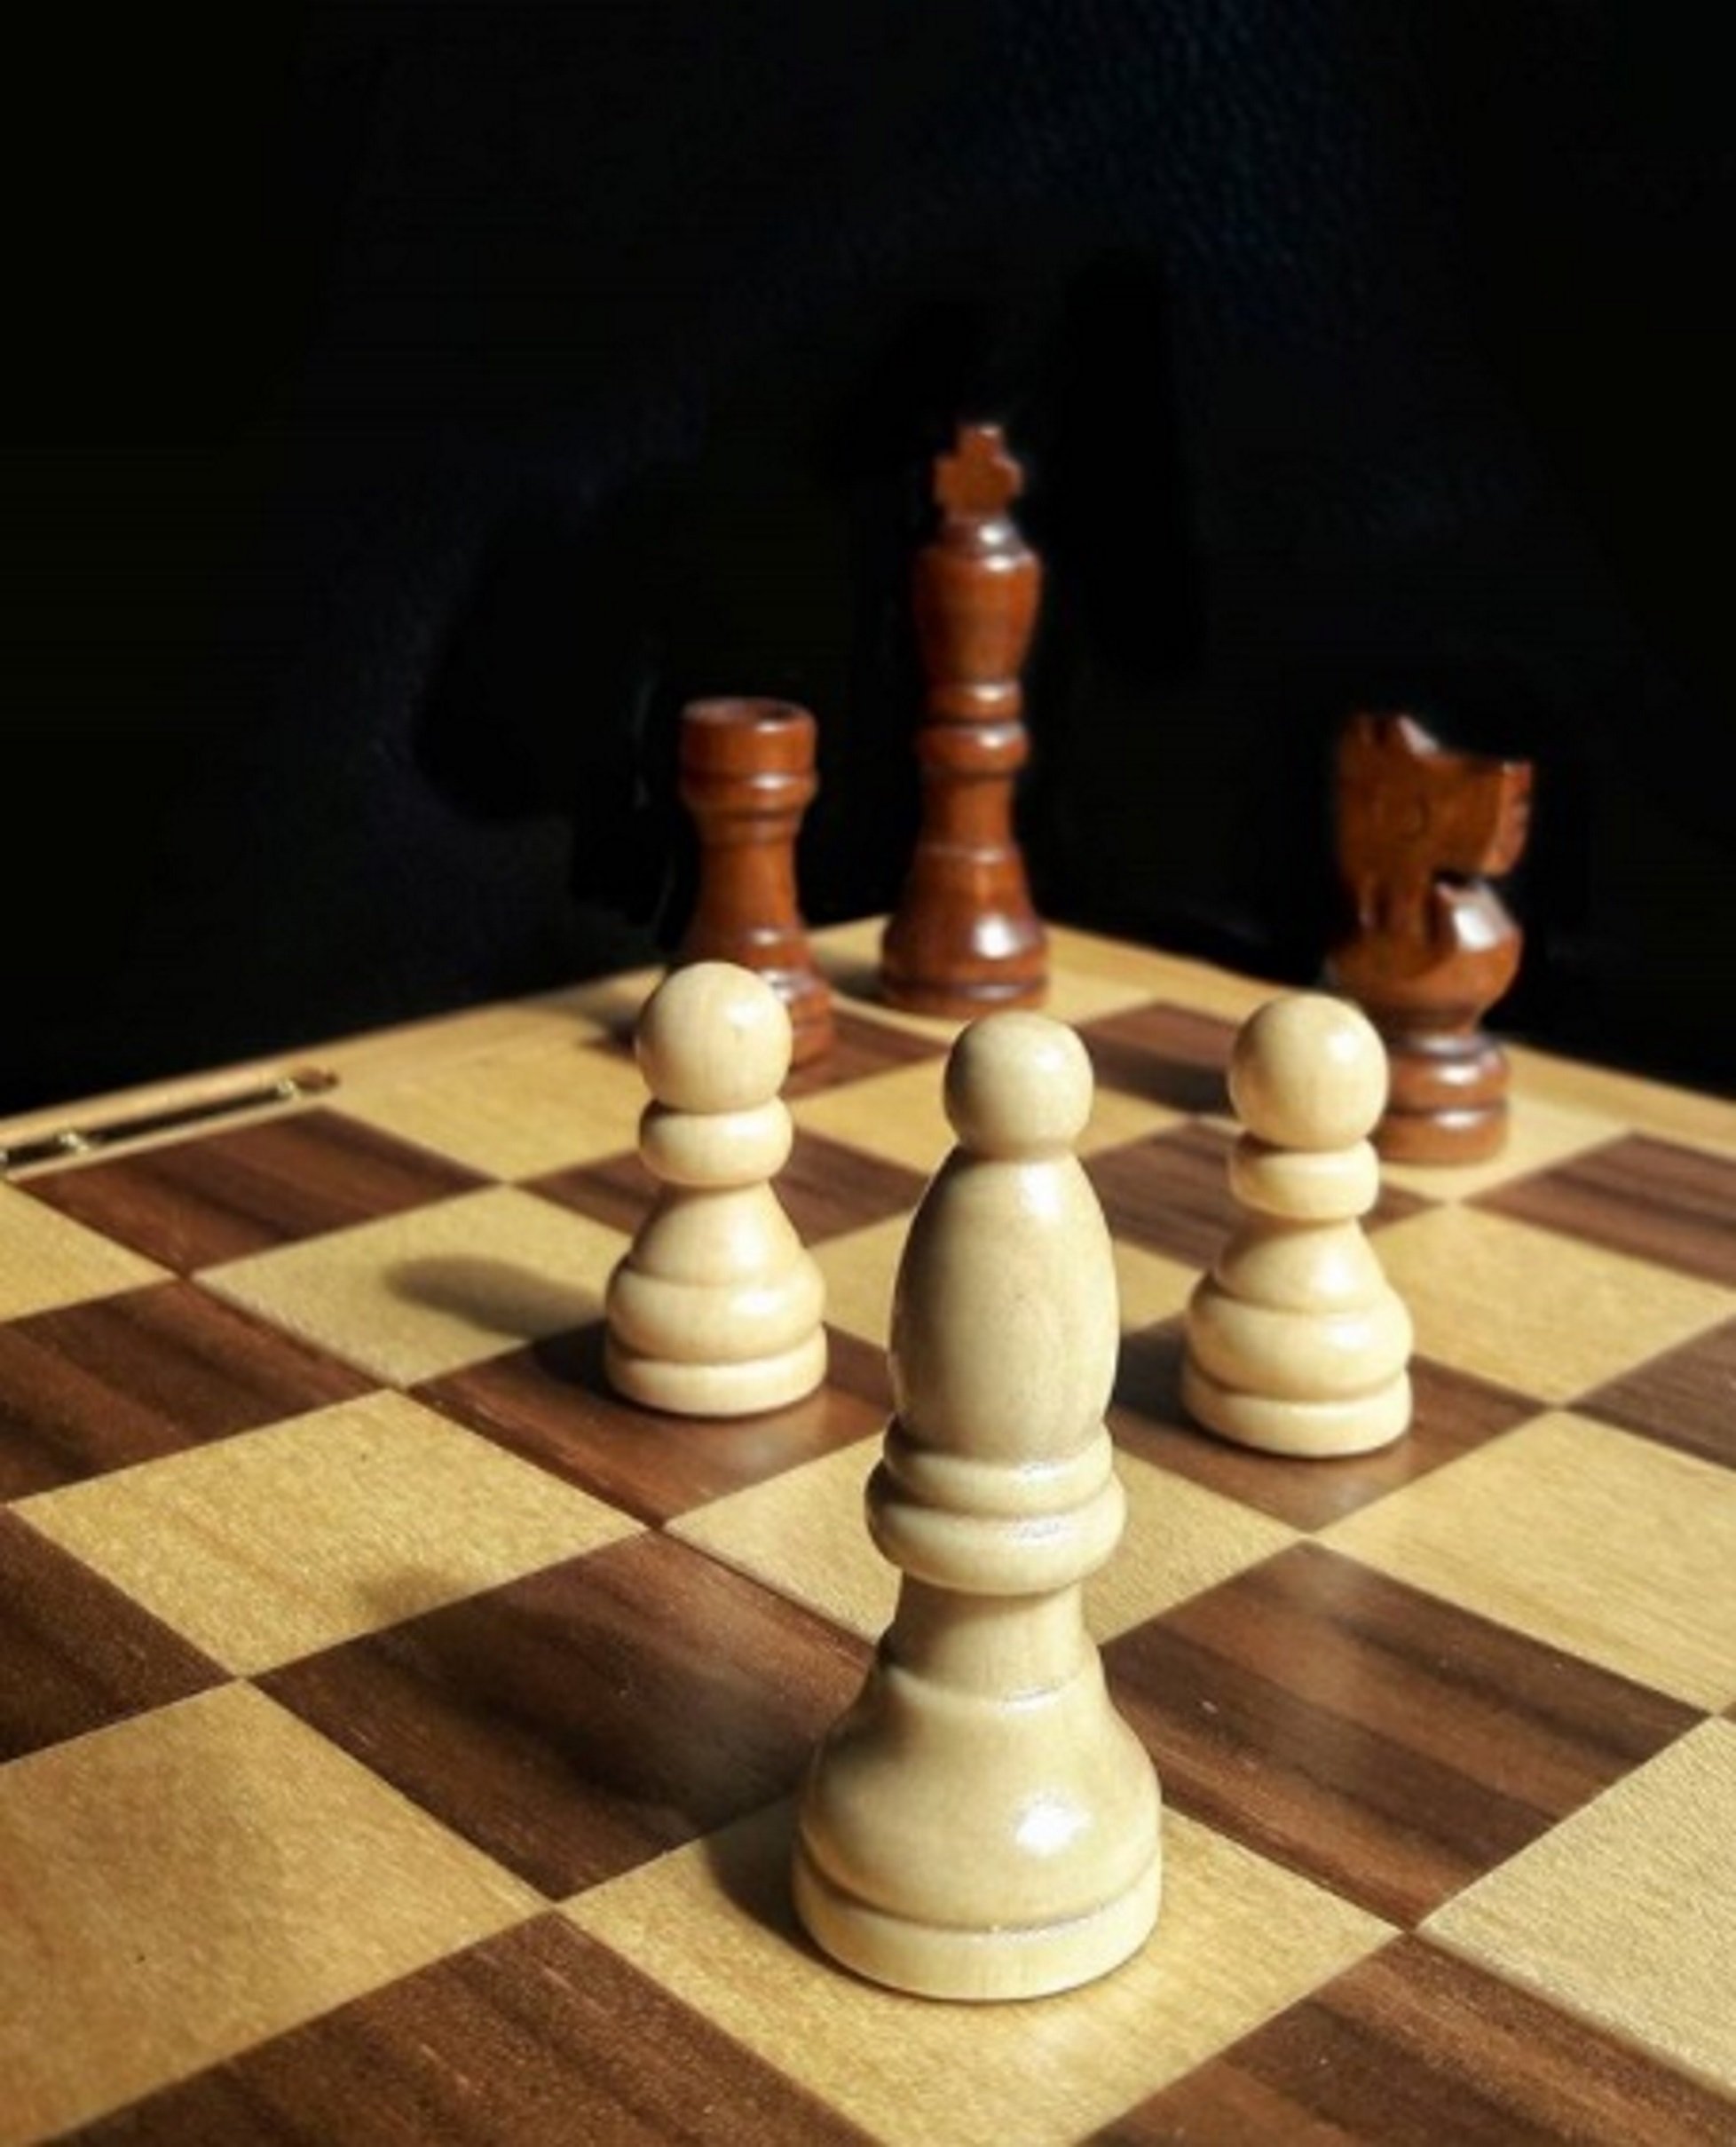 L'Instagram de Puigdemont que mostra un escac al rei